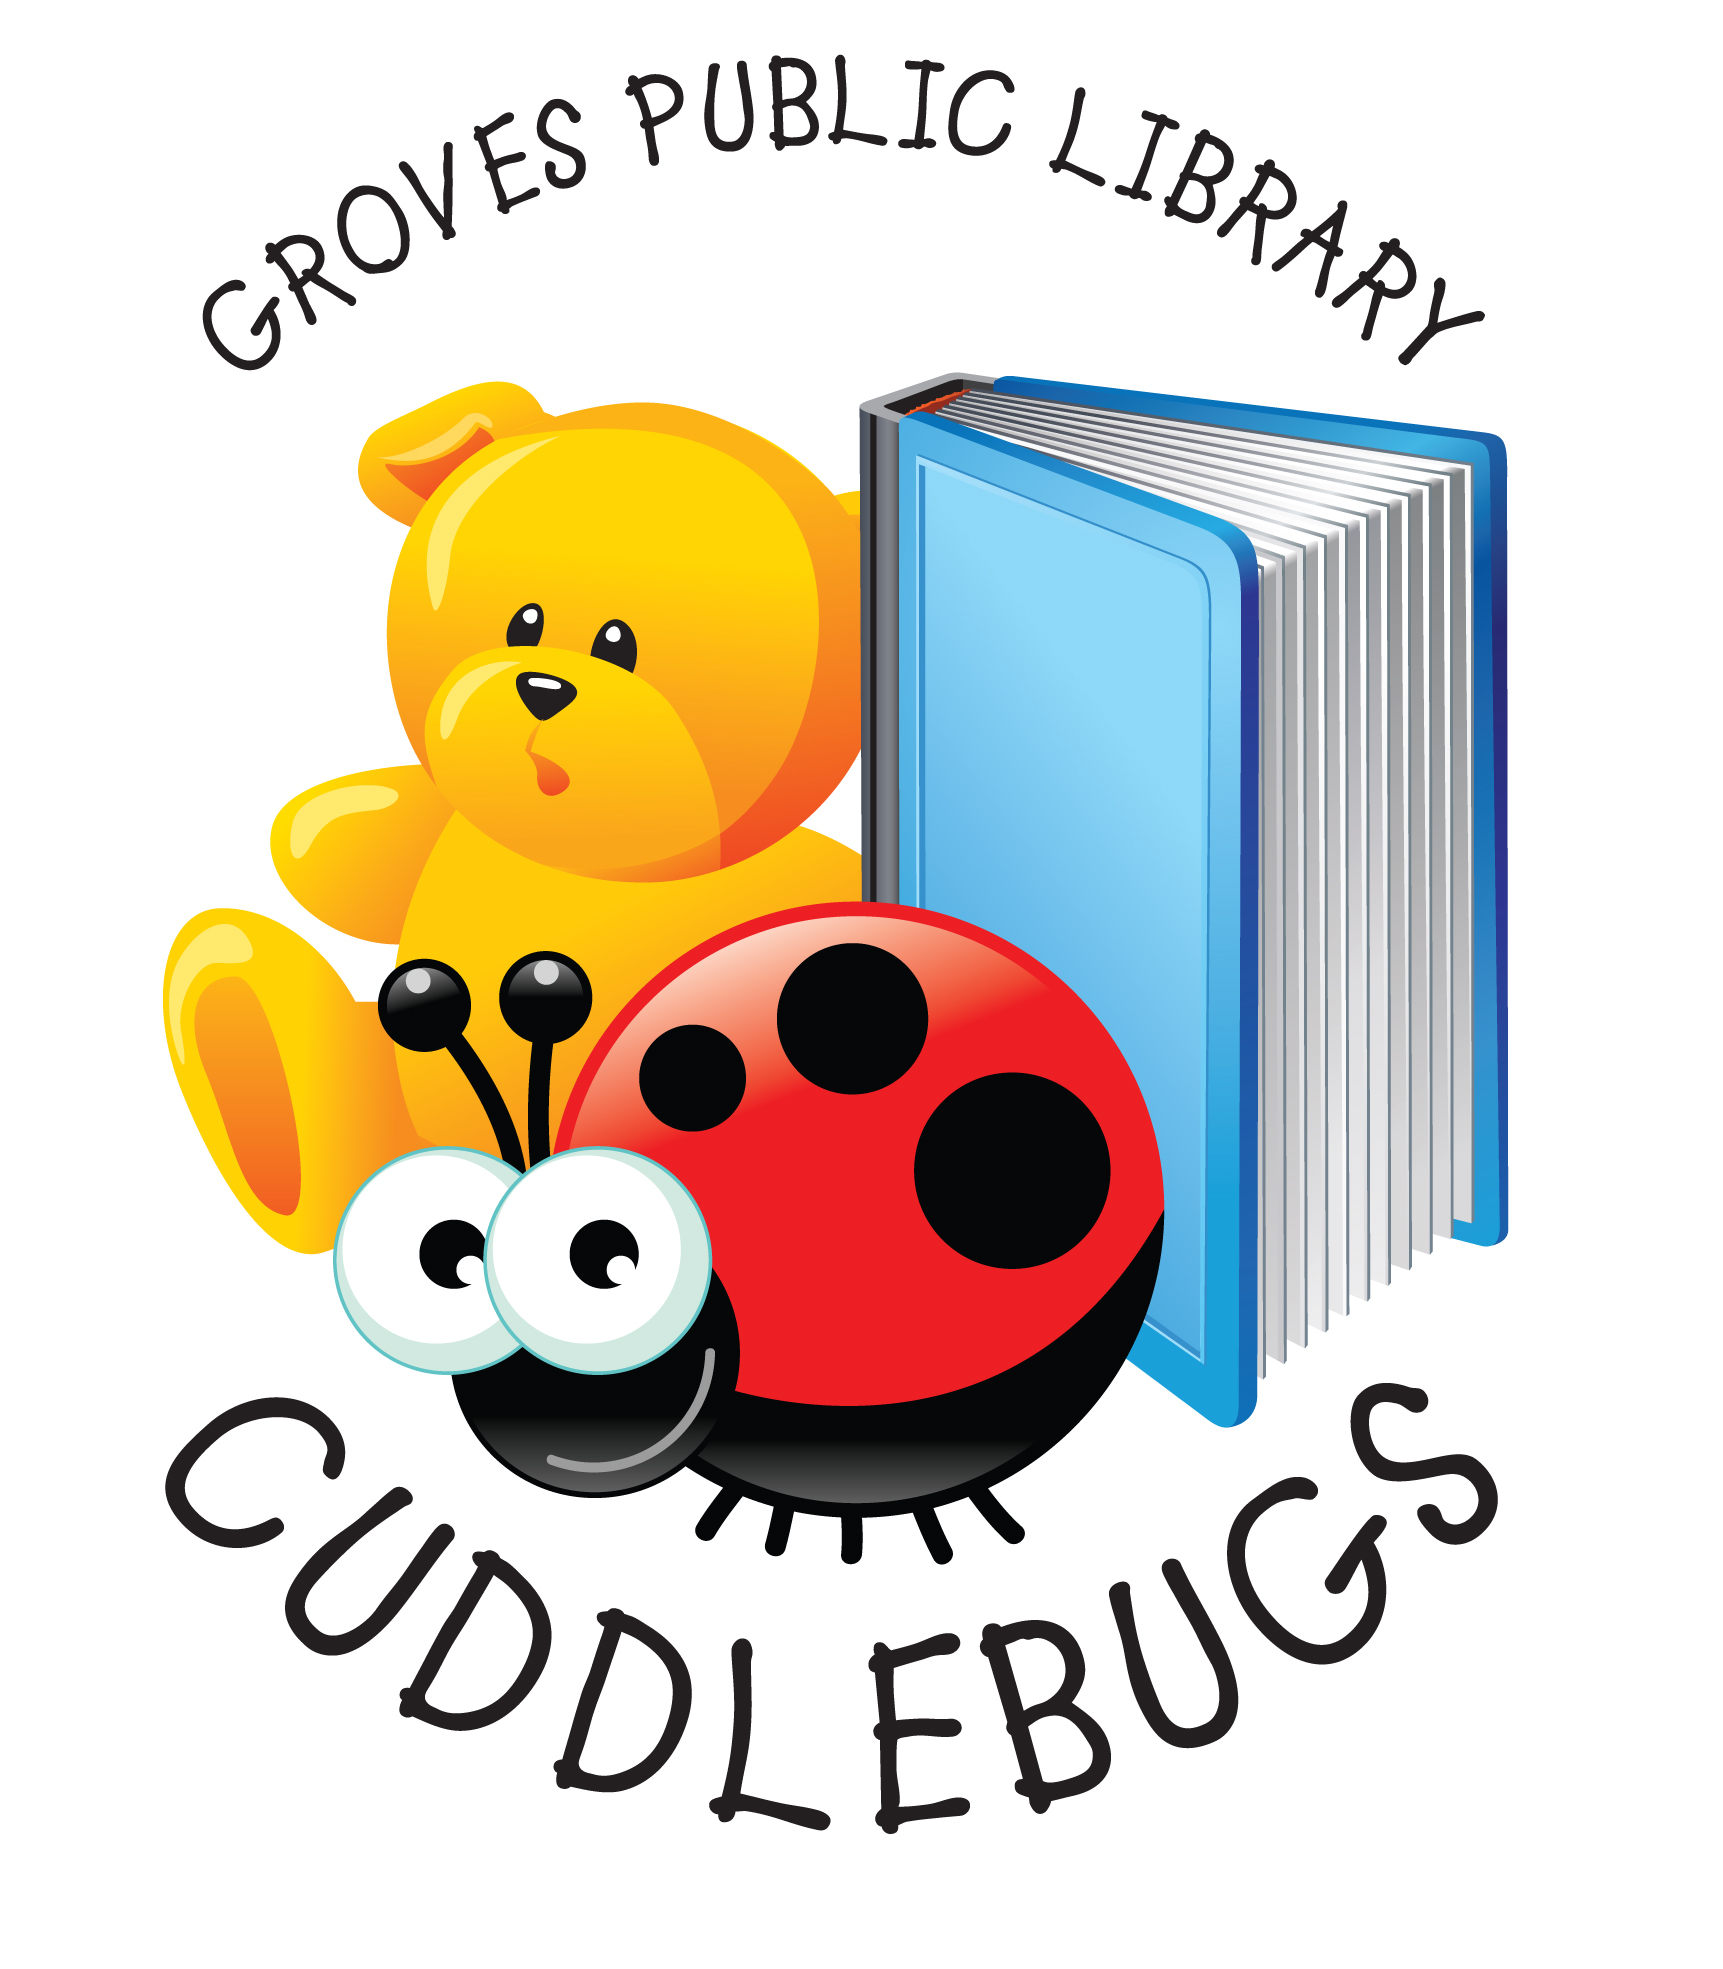 Cuddlebug-RGB.jpg